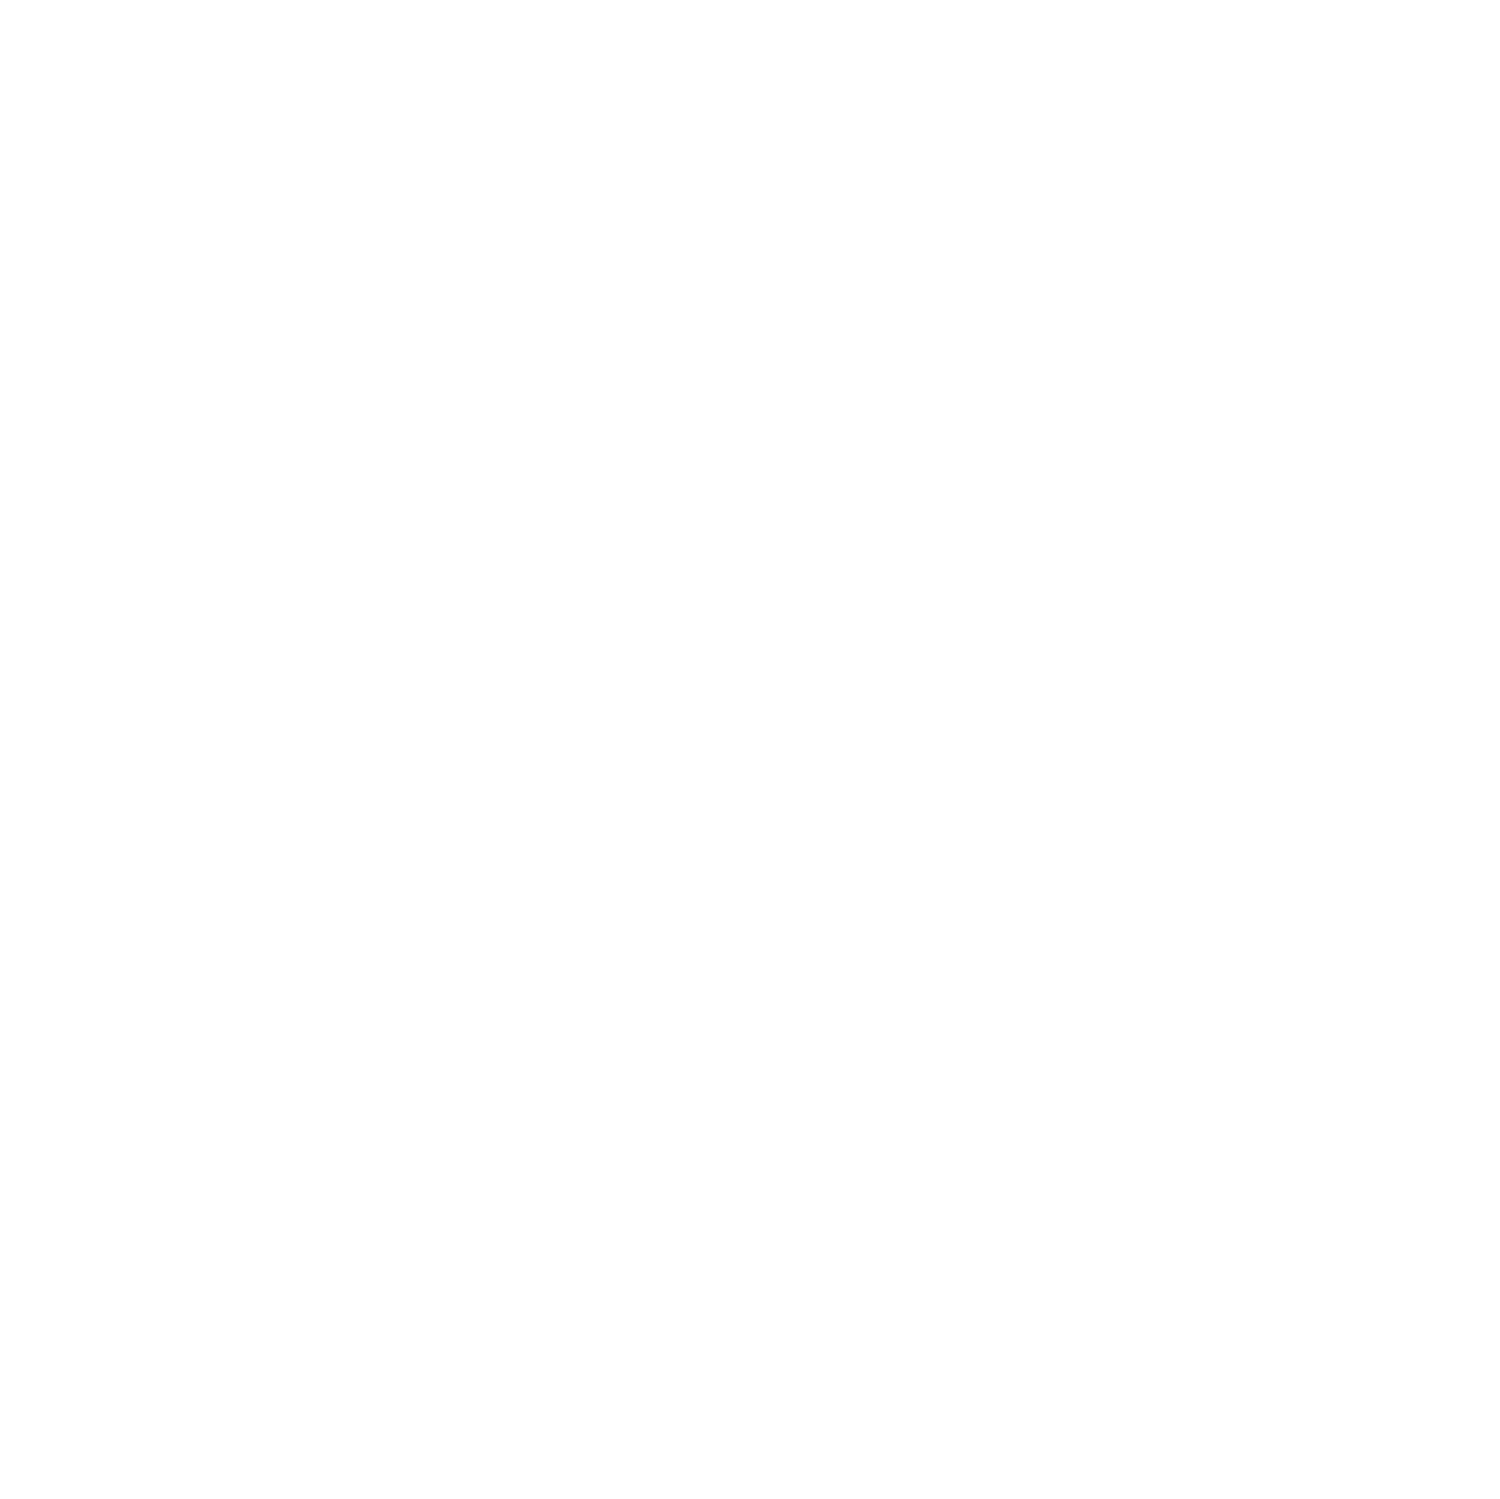 Joe Kyle Entertainment